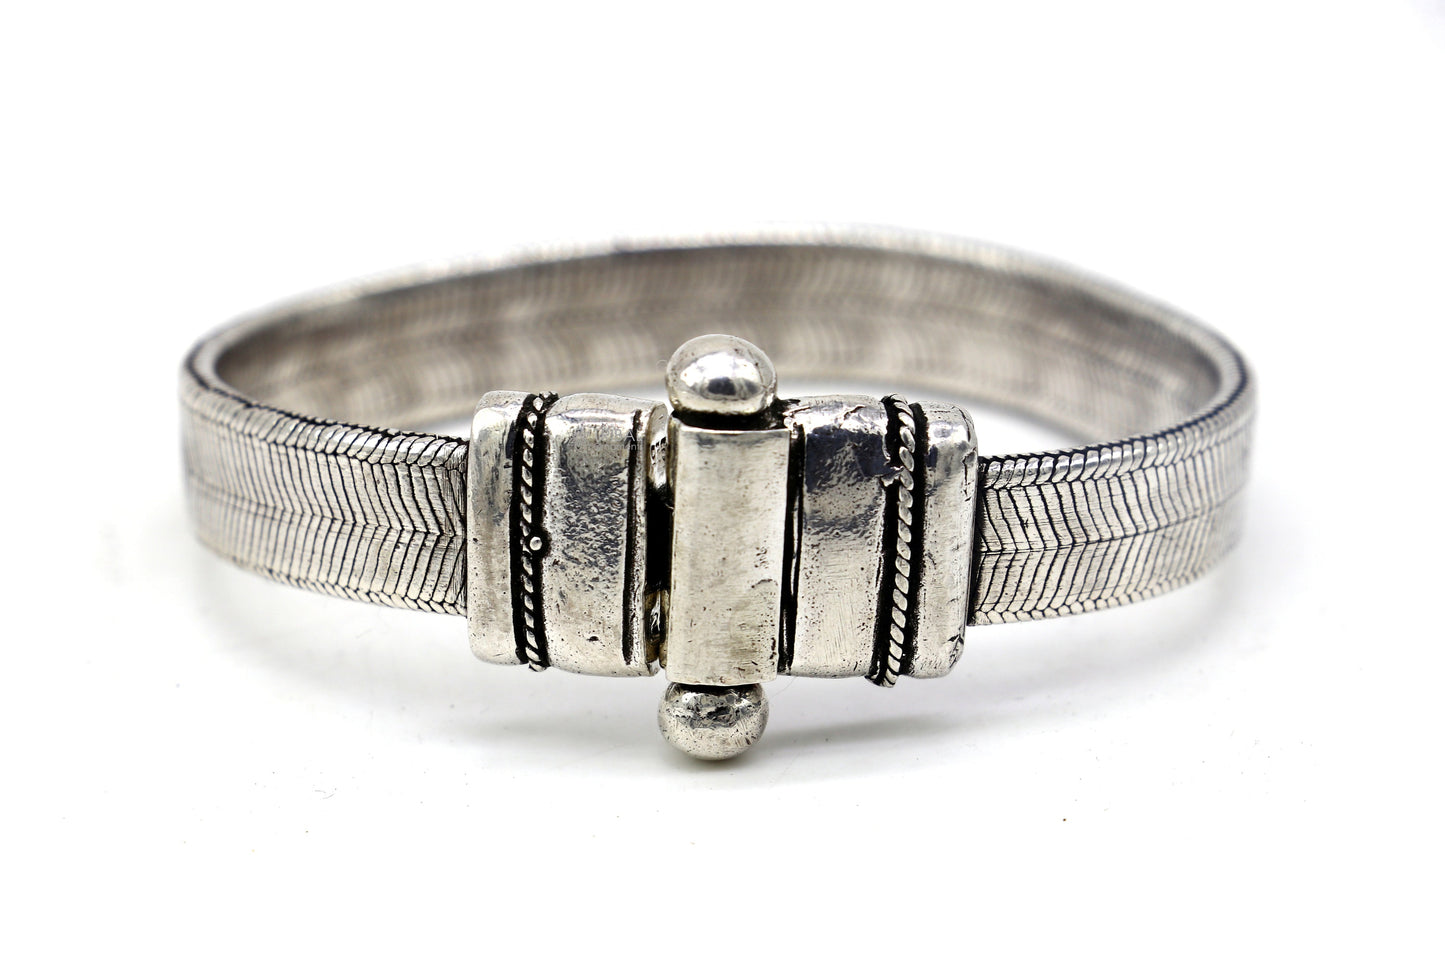 11MM" 925 sterling silver customized snake chain belt bracelet vintage design stylish men's gifting wrist belt jewelry sbr728 - TRIBAL ORNAMENTS